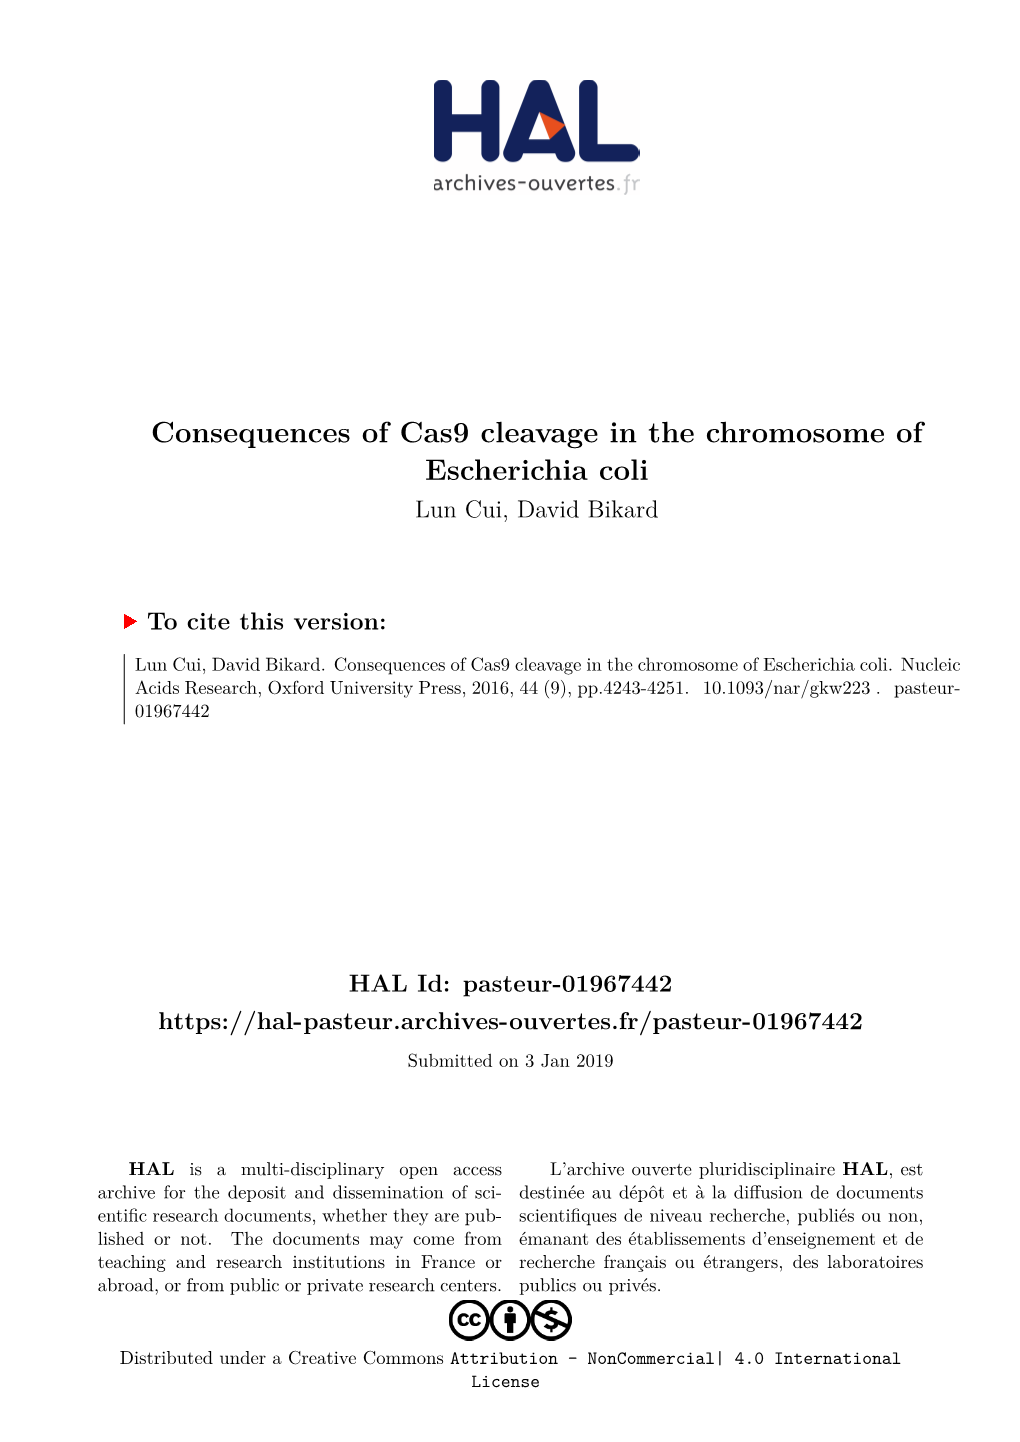 Consequences of Cas9 Cleavage in the Chromosome of Escherichia Coli Lun Cui, David Bikard